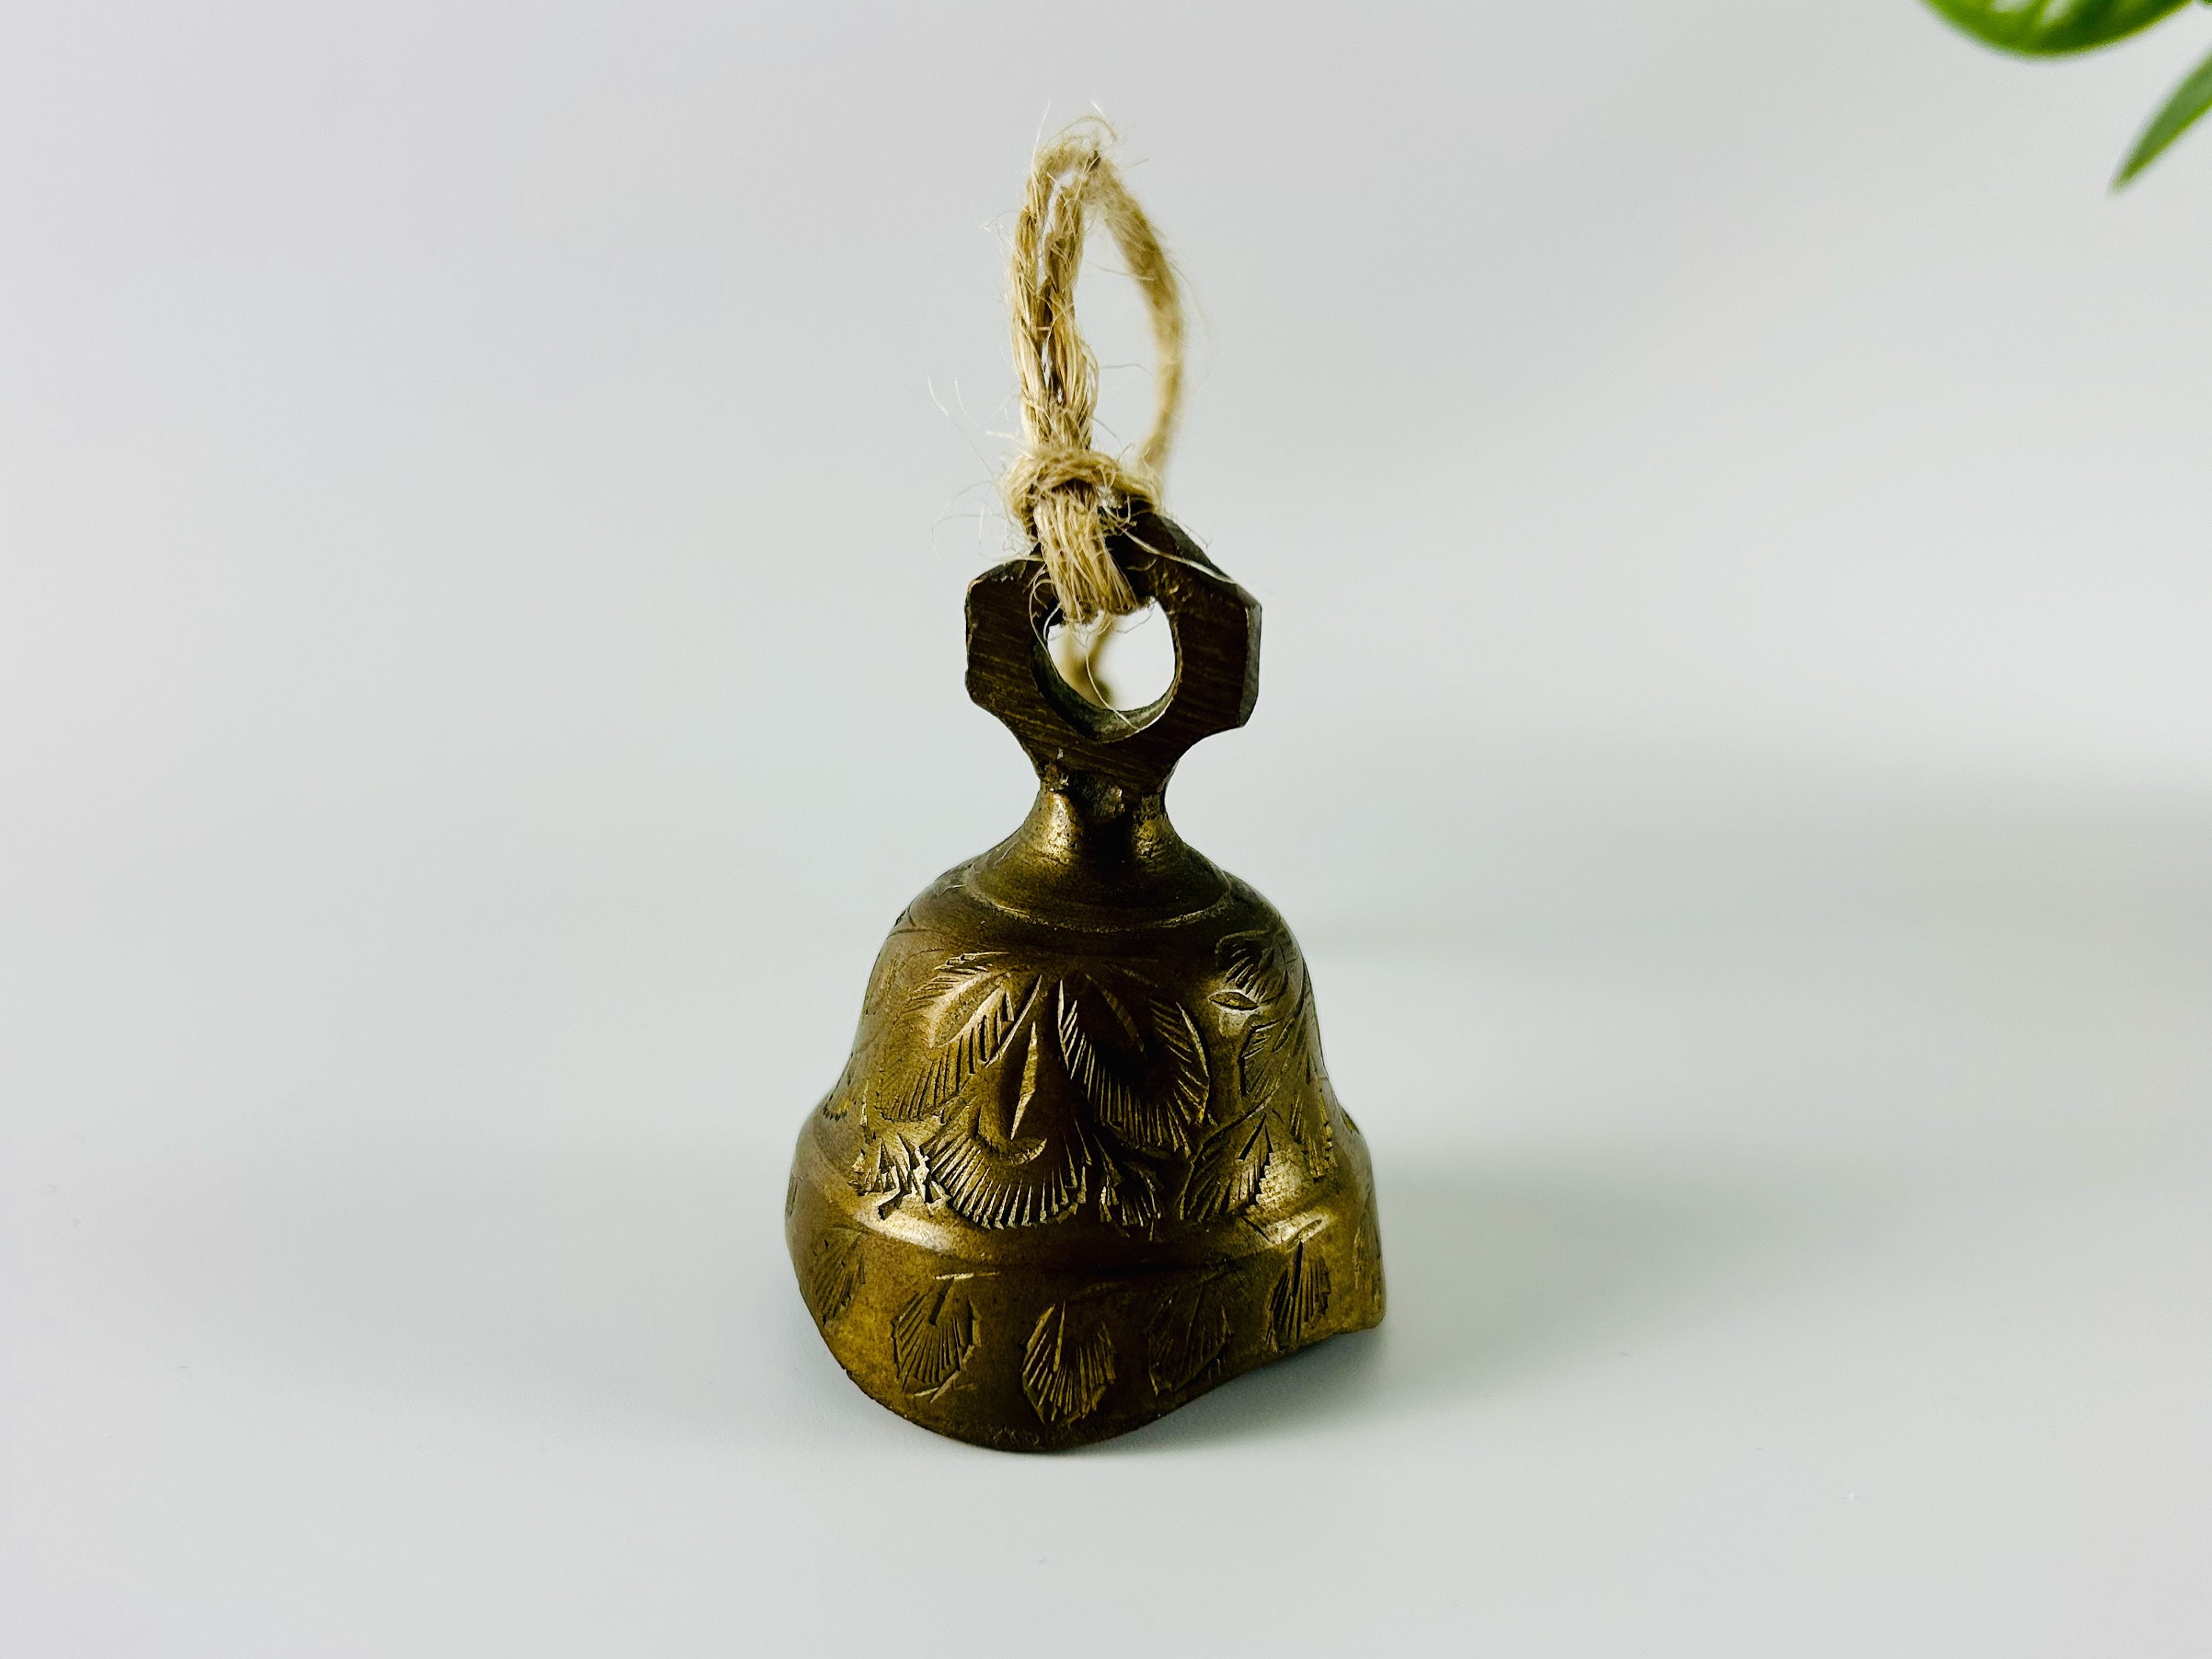 Vintage Engraved Brass Bells From India - Set of Five Bells